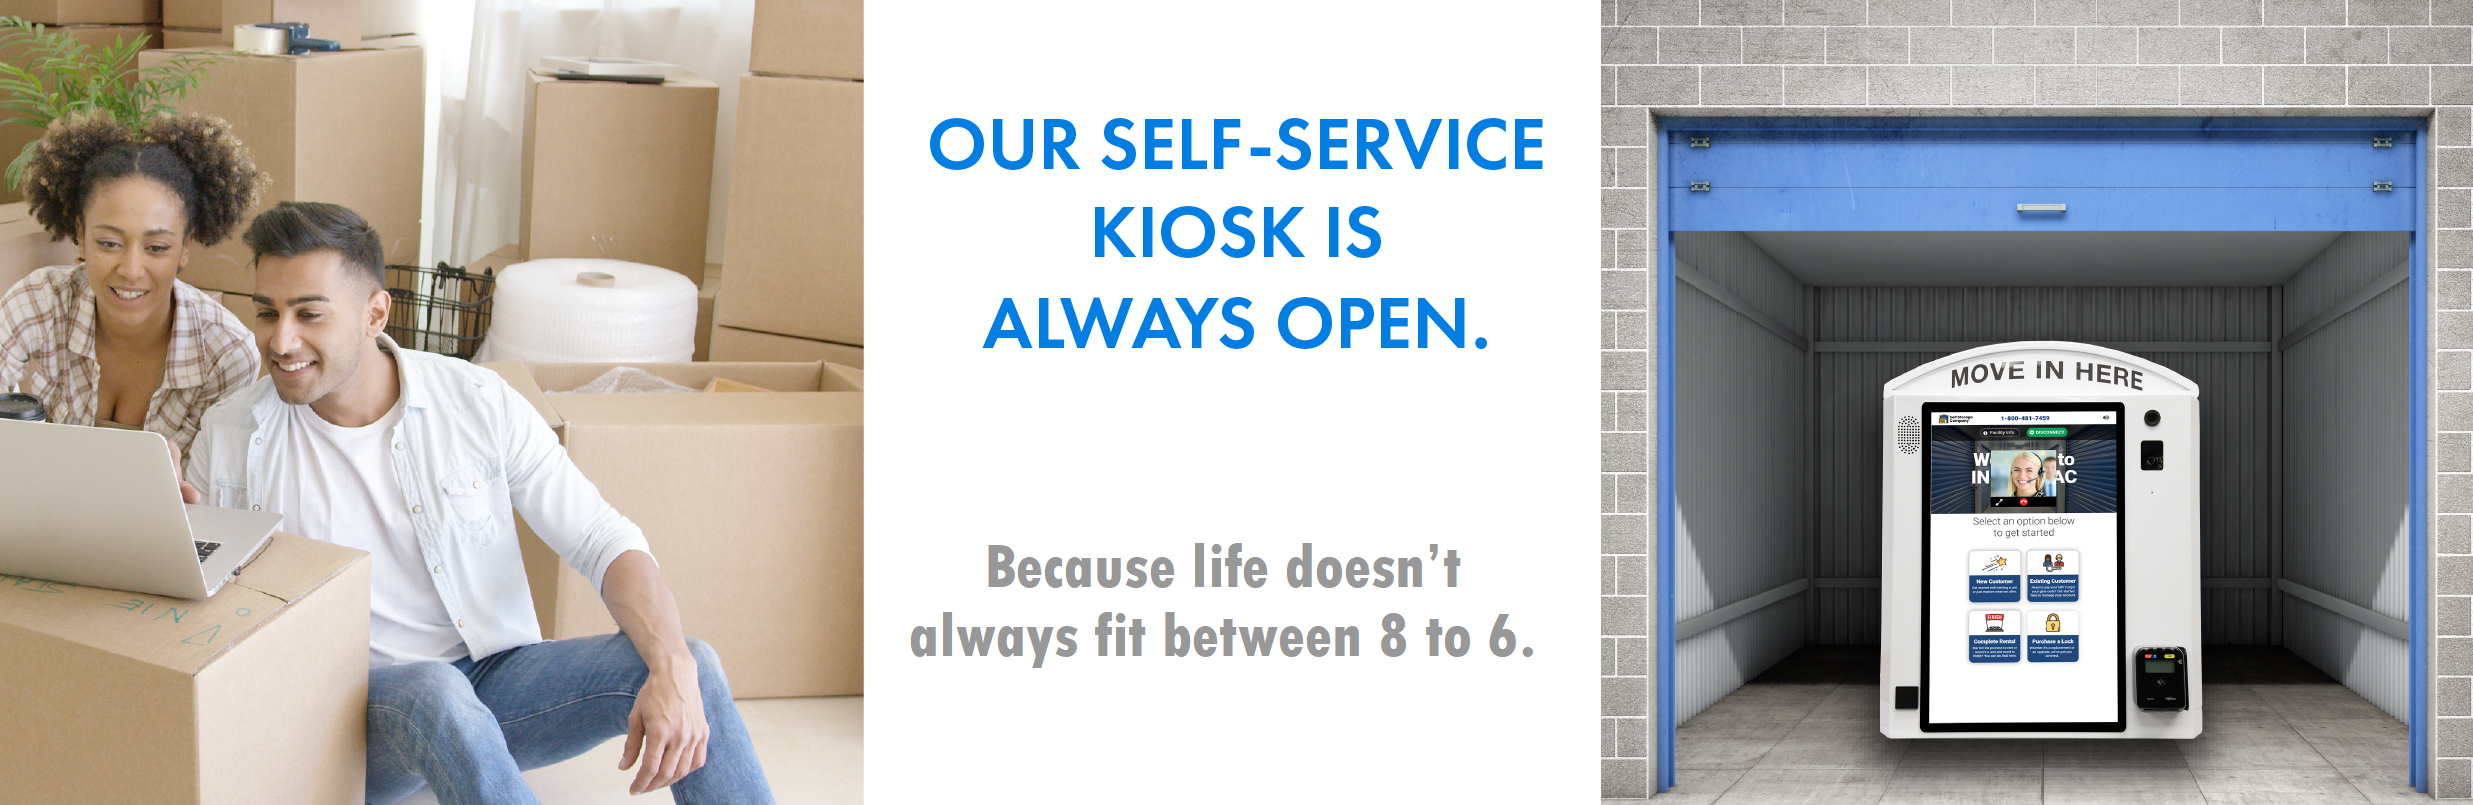 self service kiosk